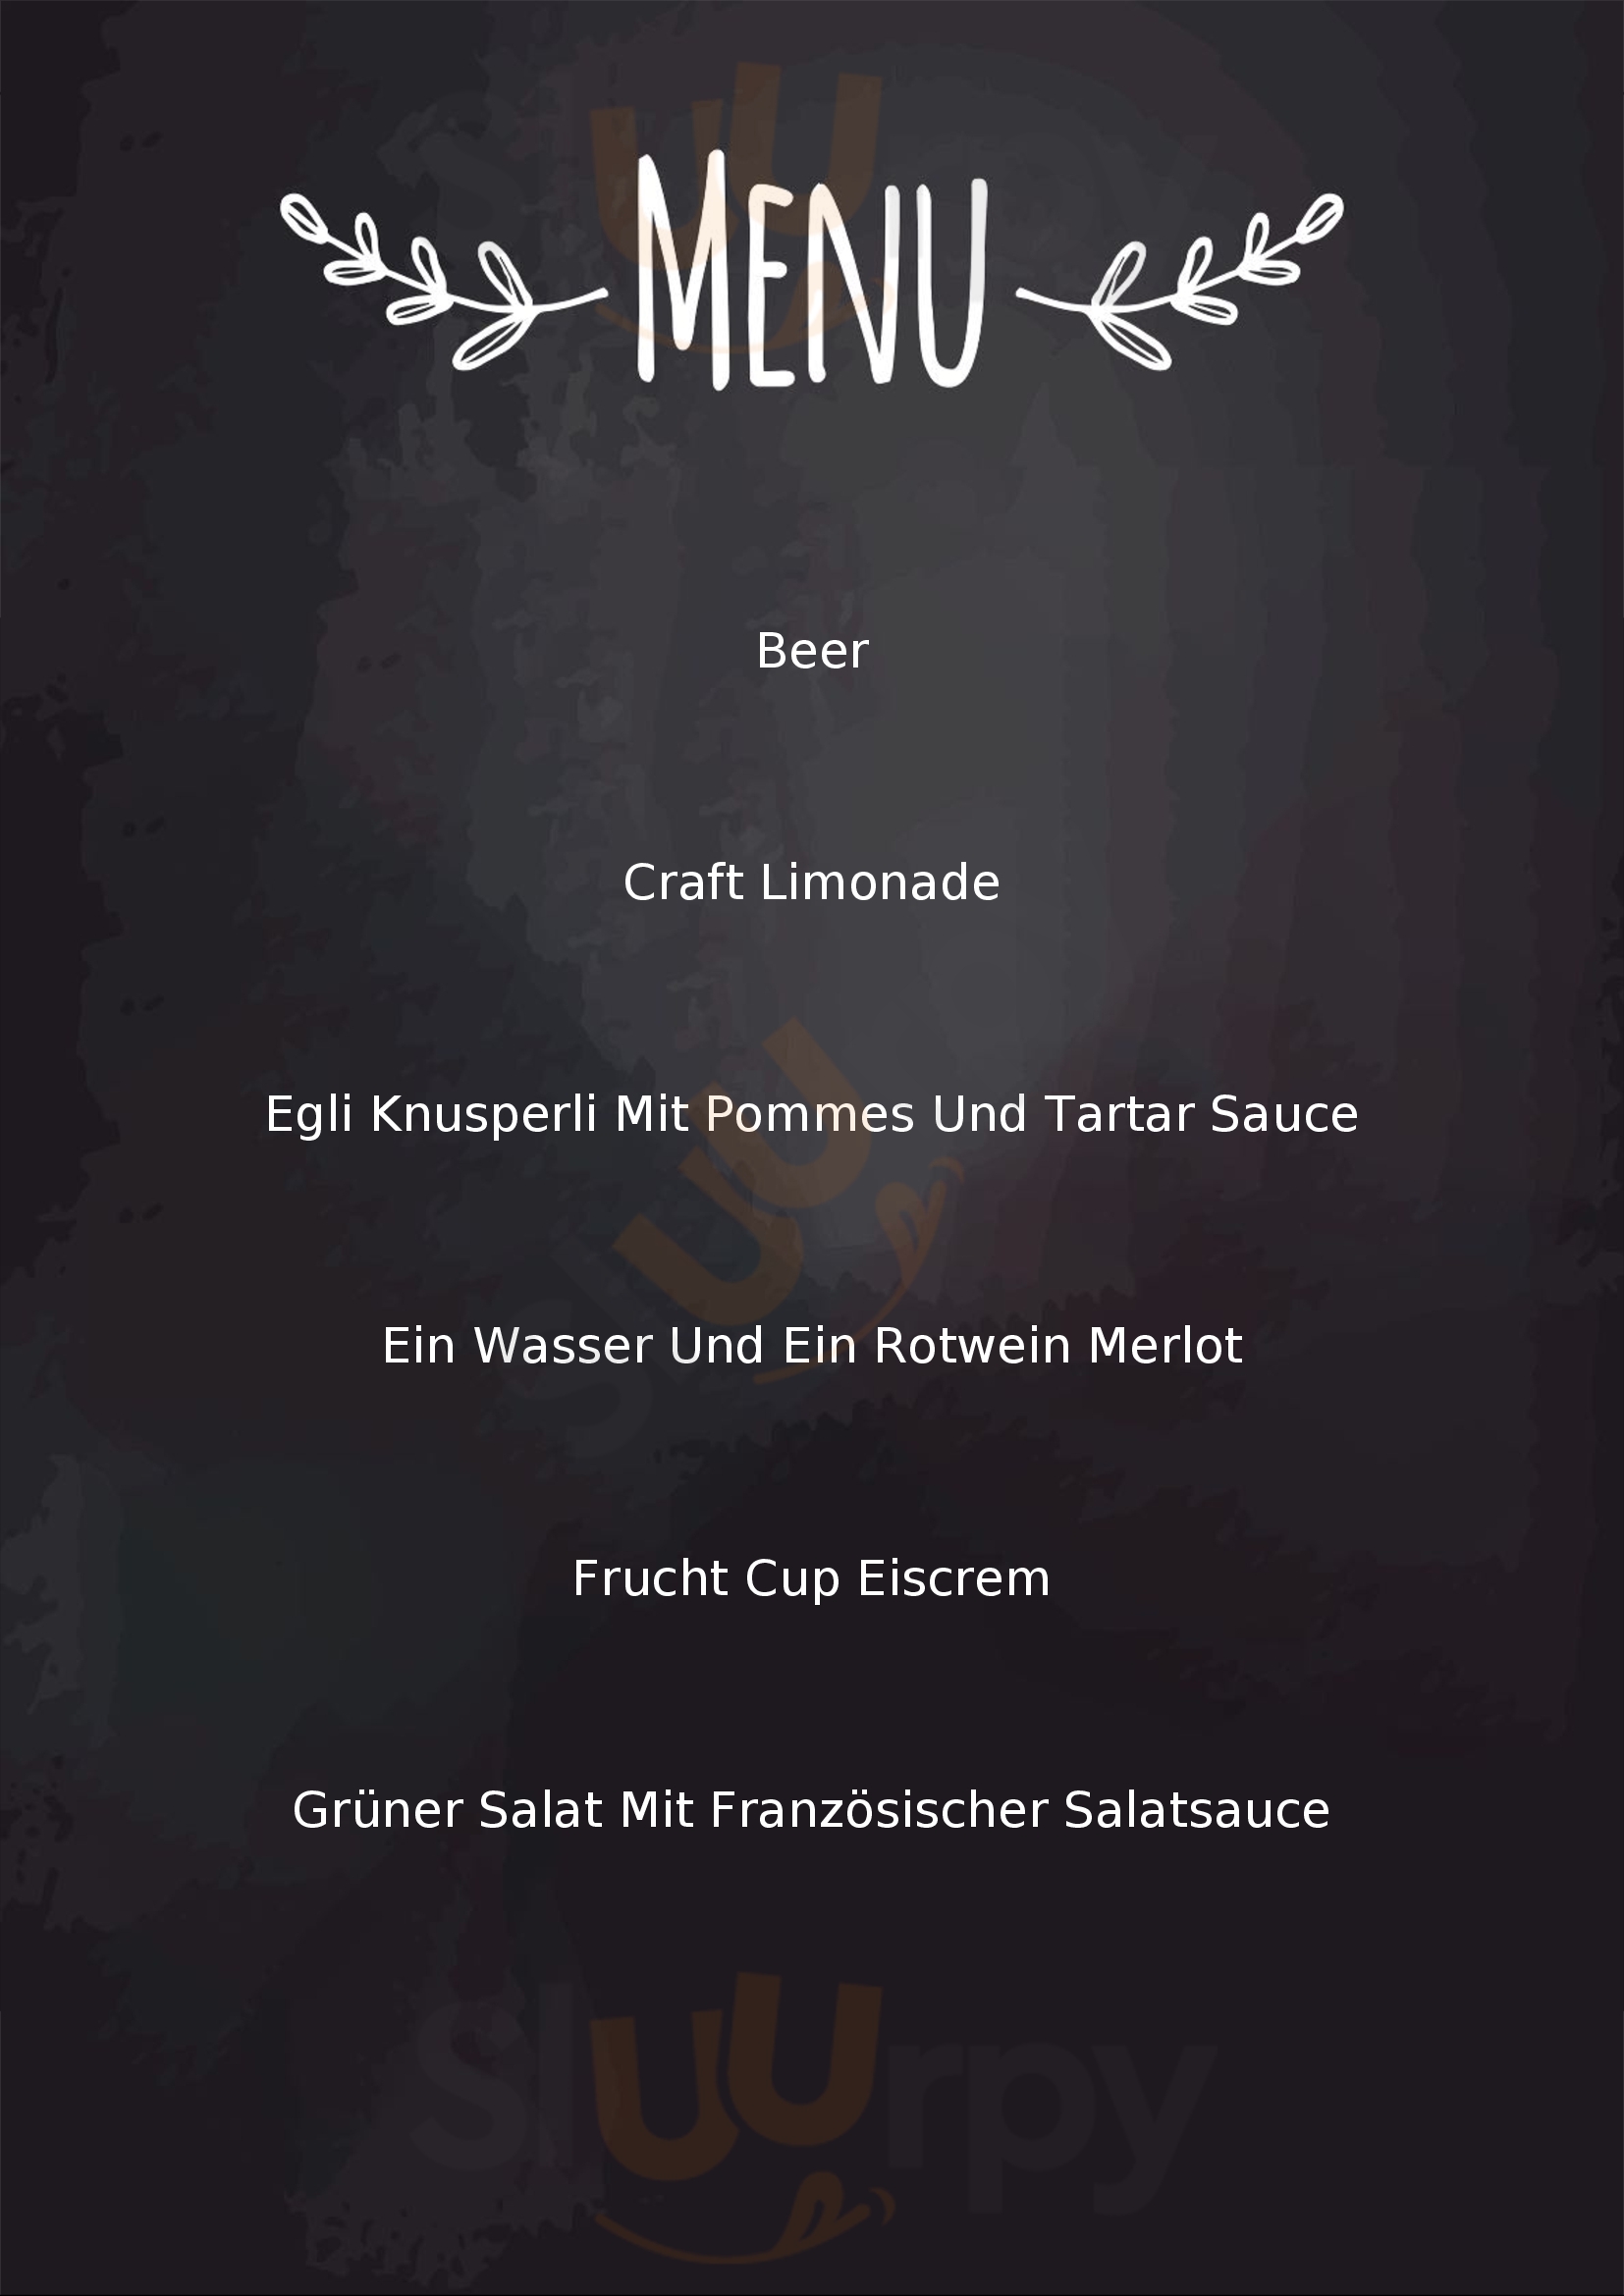 Stadtkeller Restaurant & Bierstube Basel Menu - 1